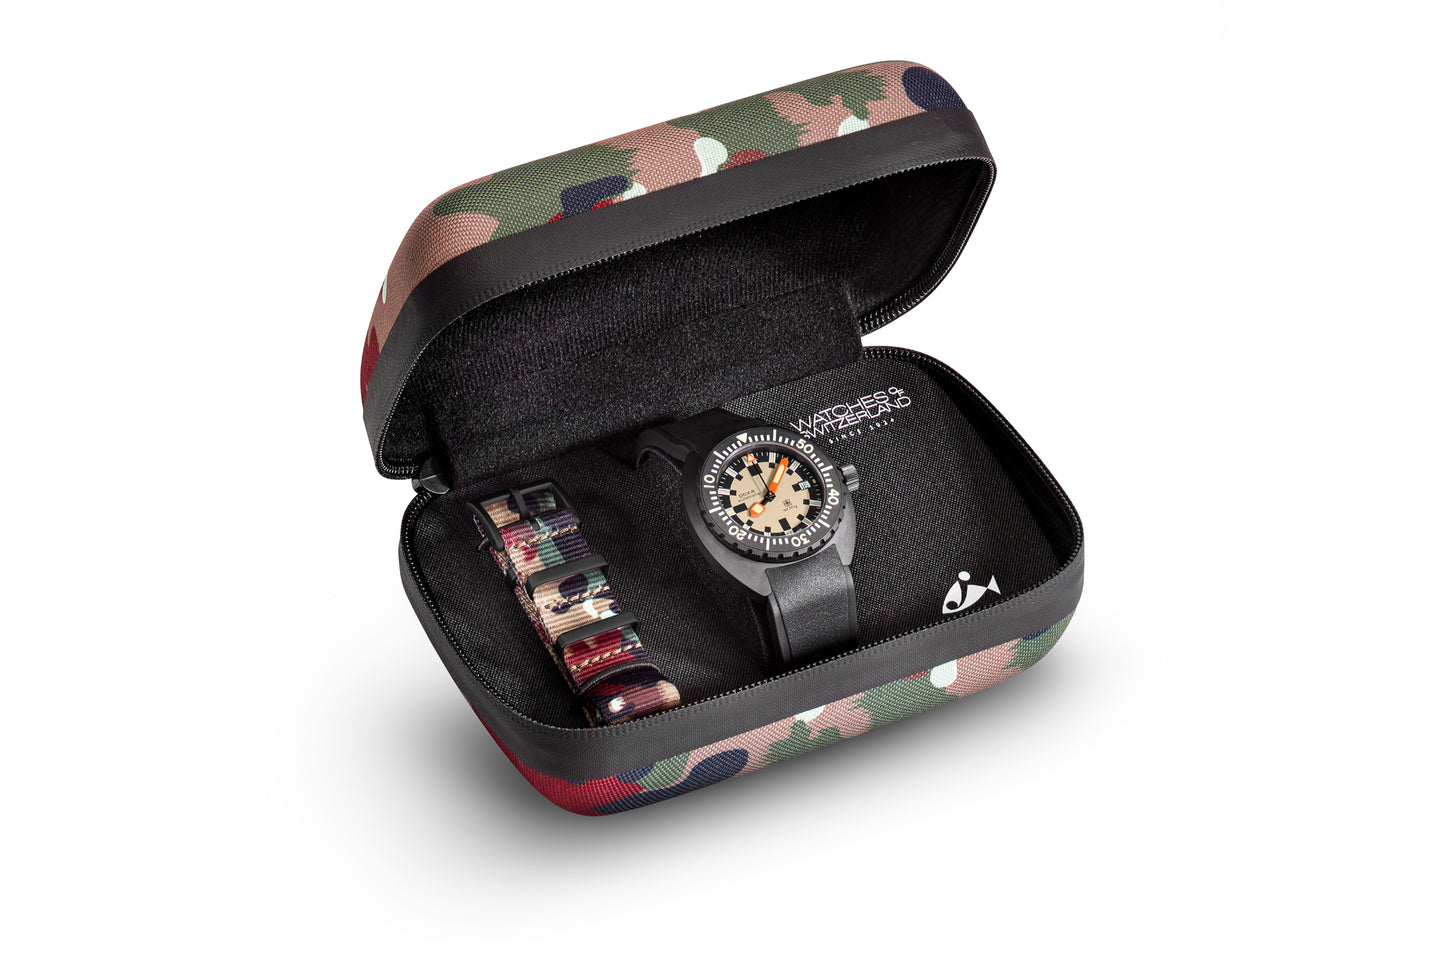 DOXA Army Watches Of Switzerland Edition